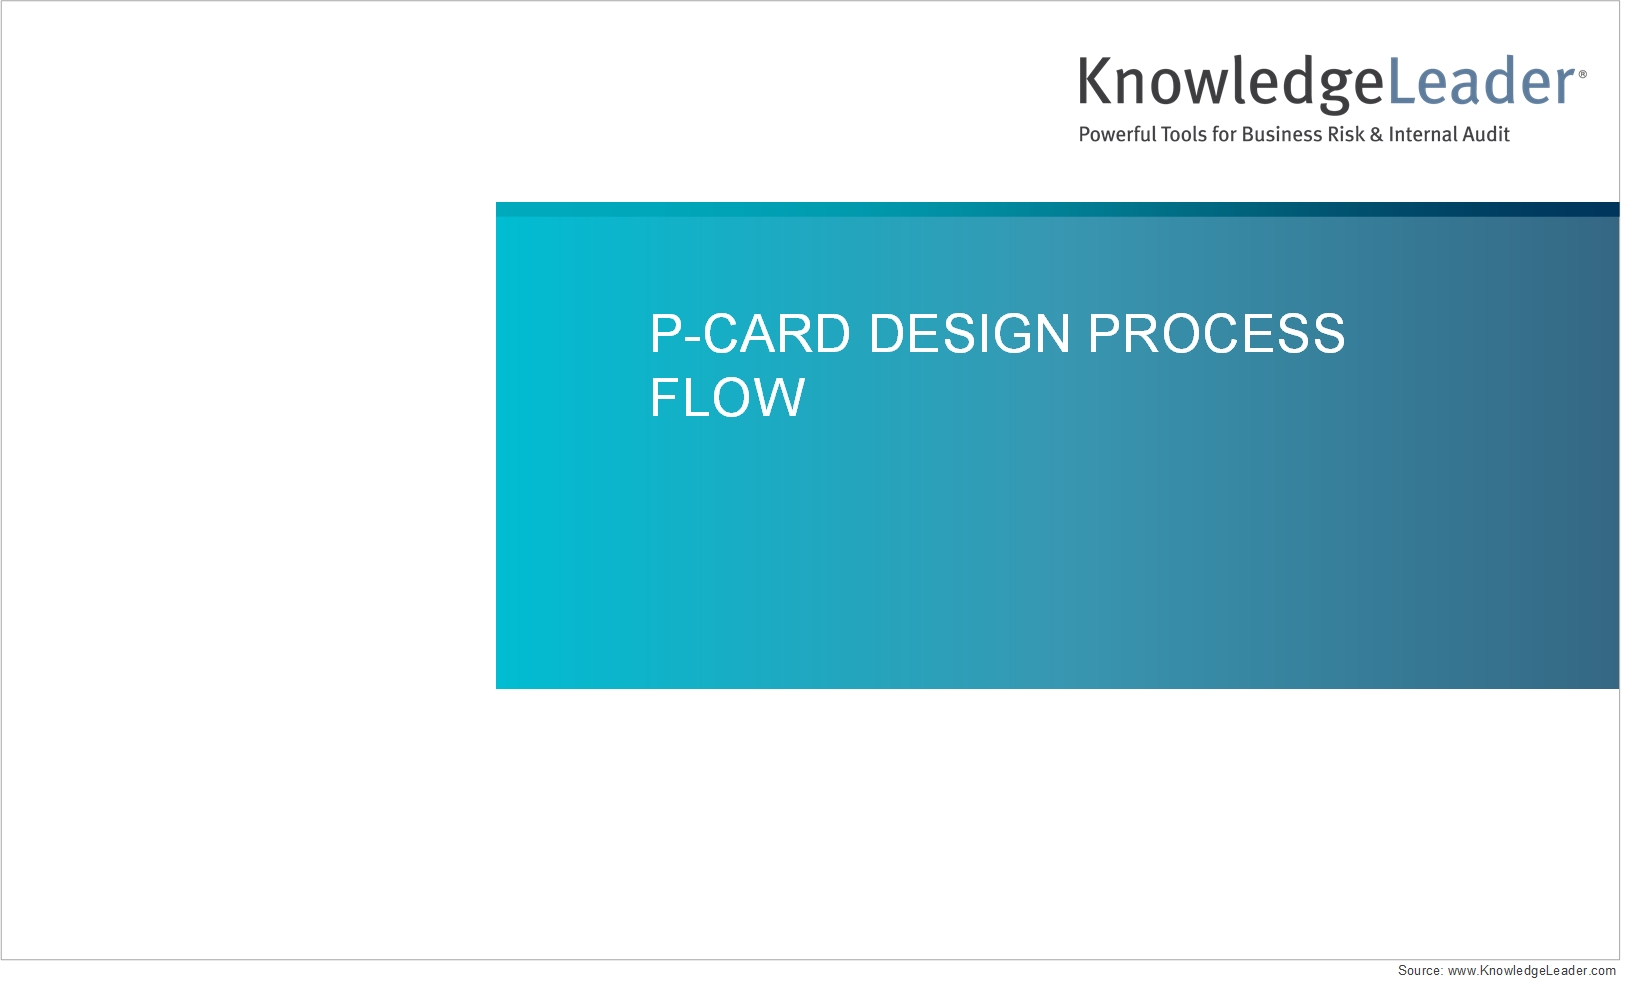 P-Card Design Process Flow